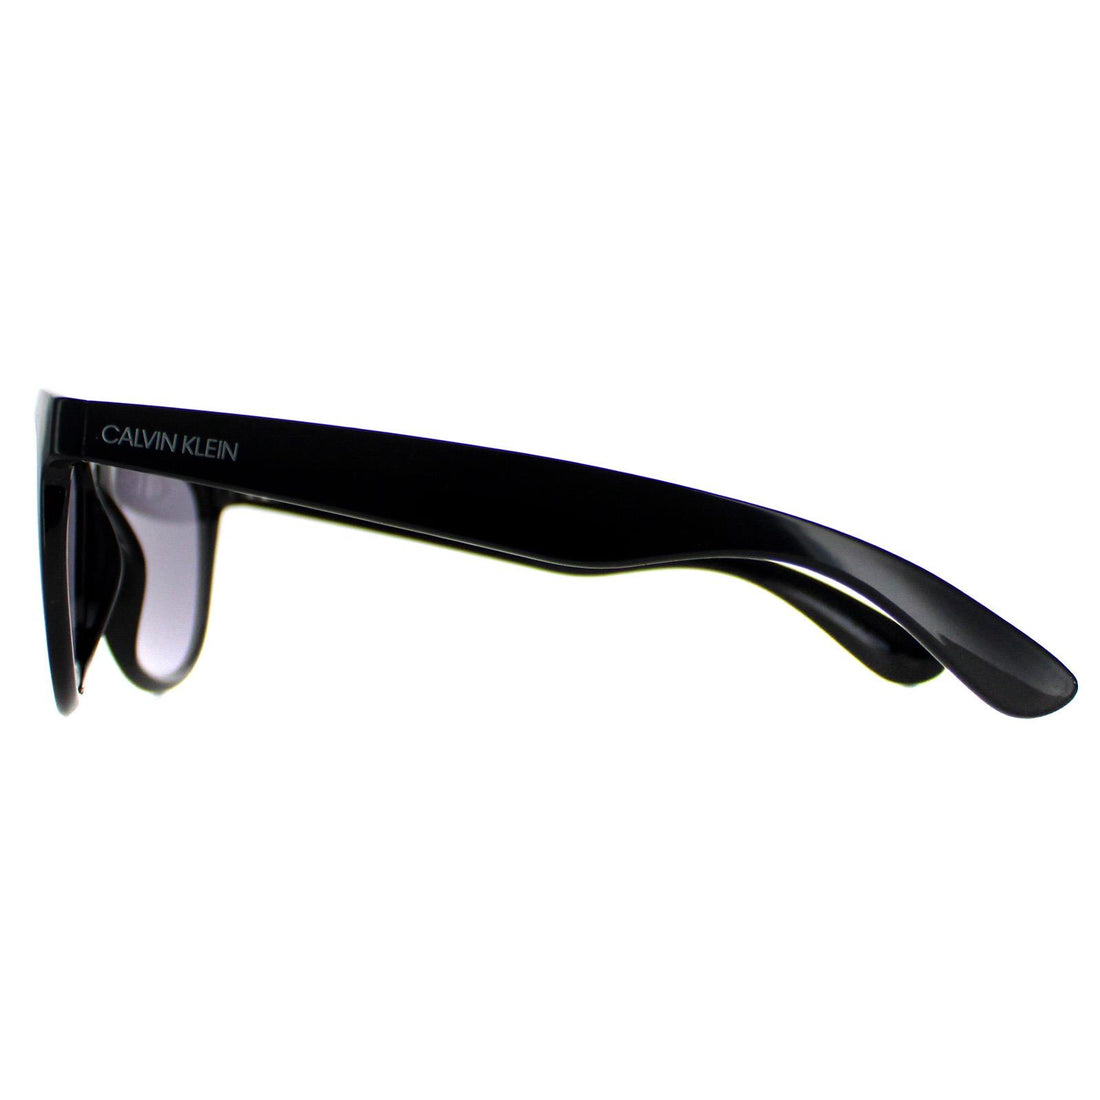 Calvin Klein Sunglasses CK19567S 001 Black Smoke